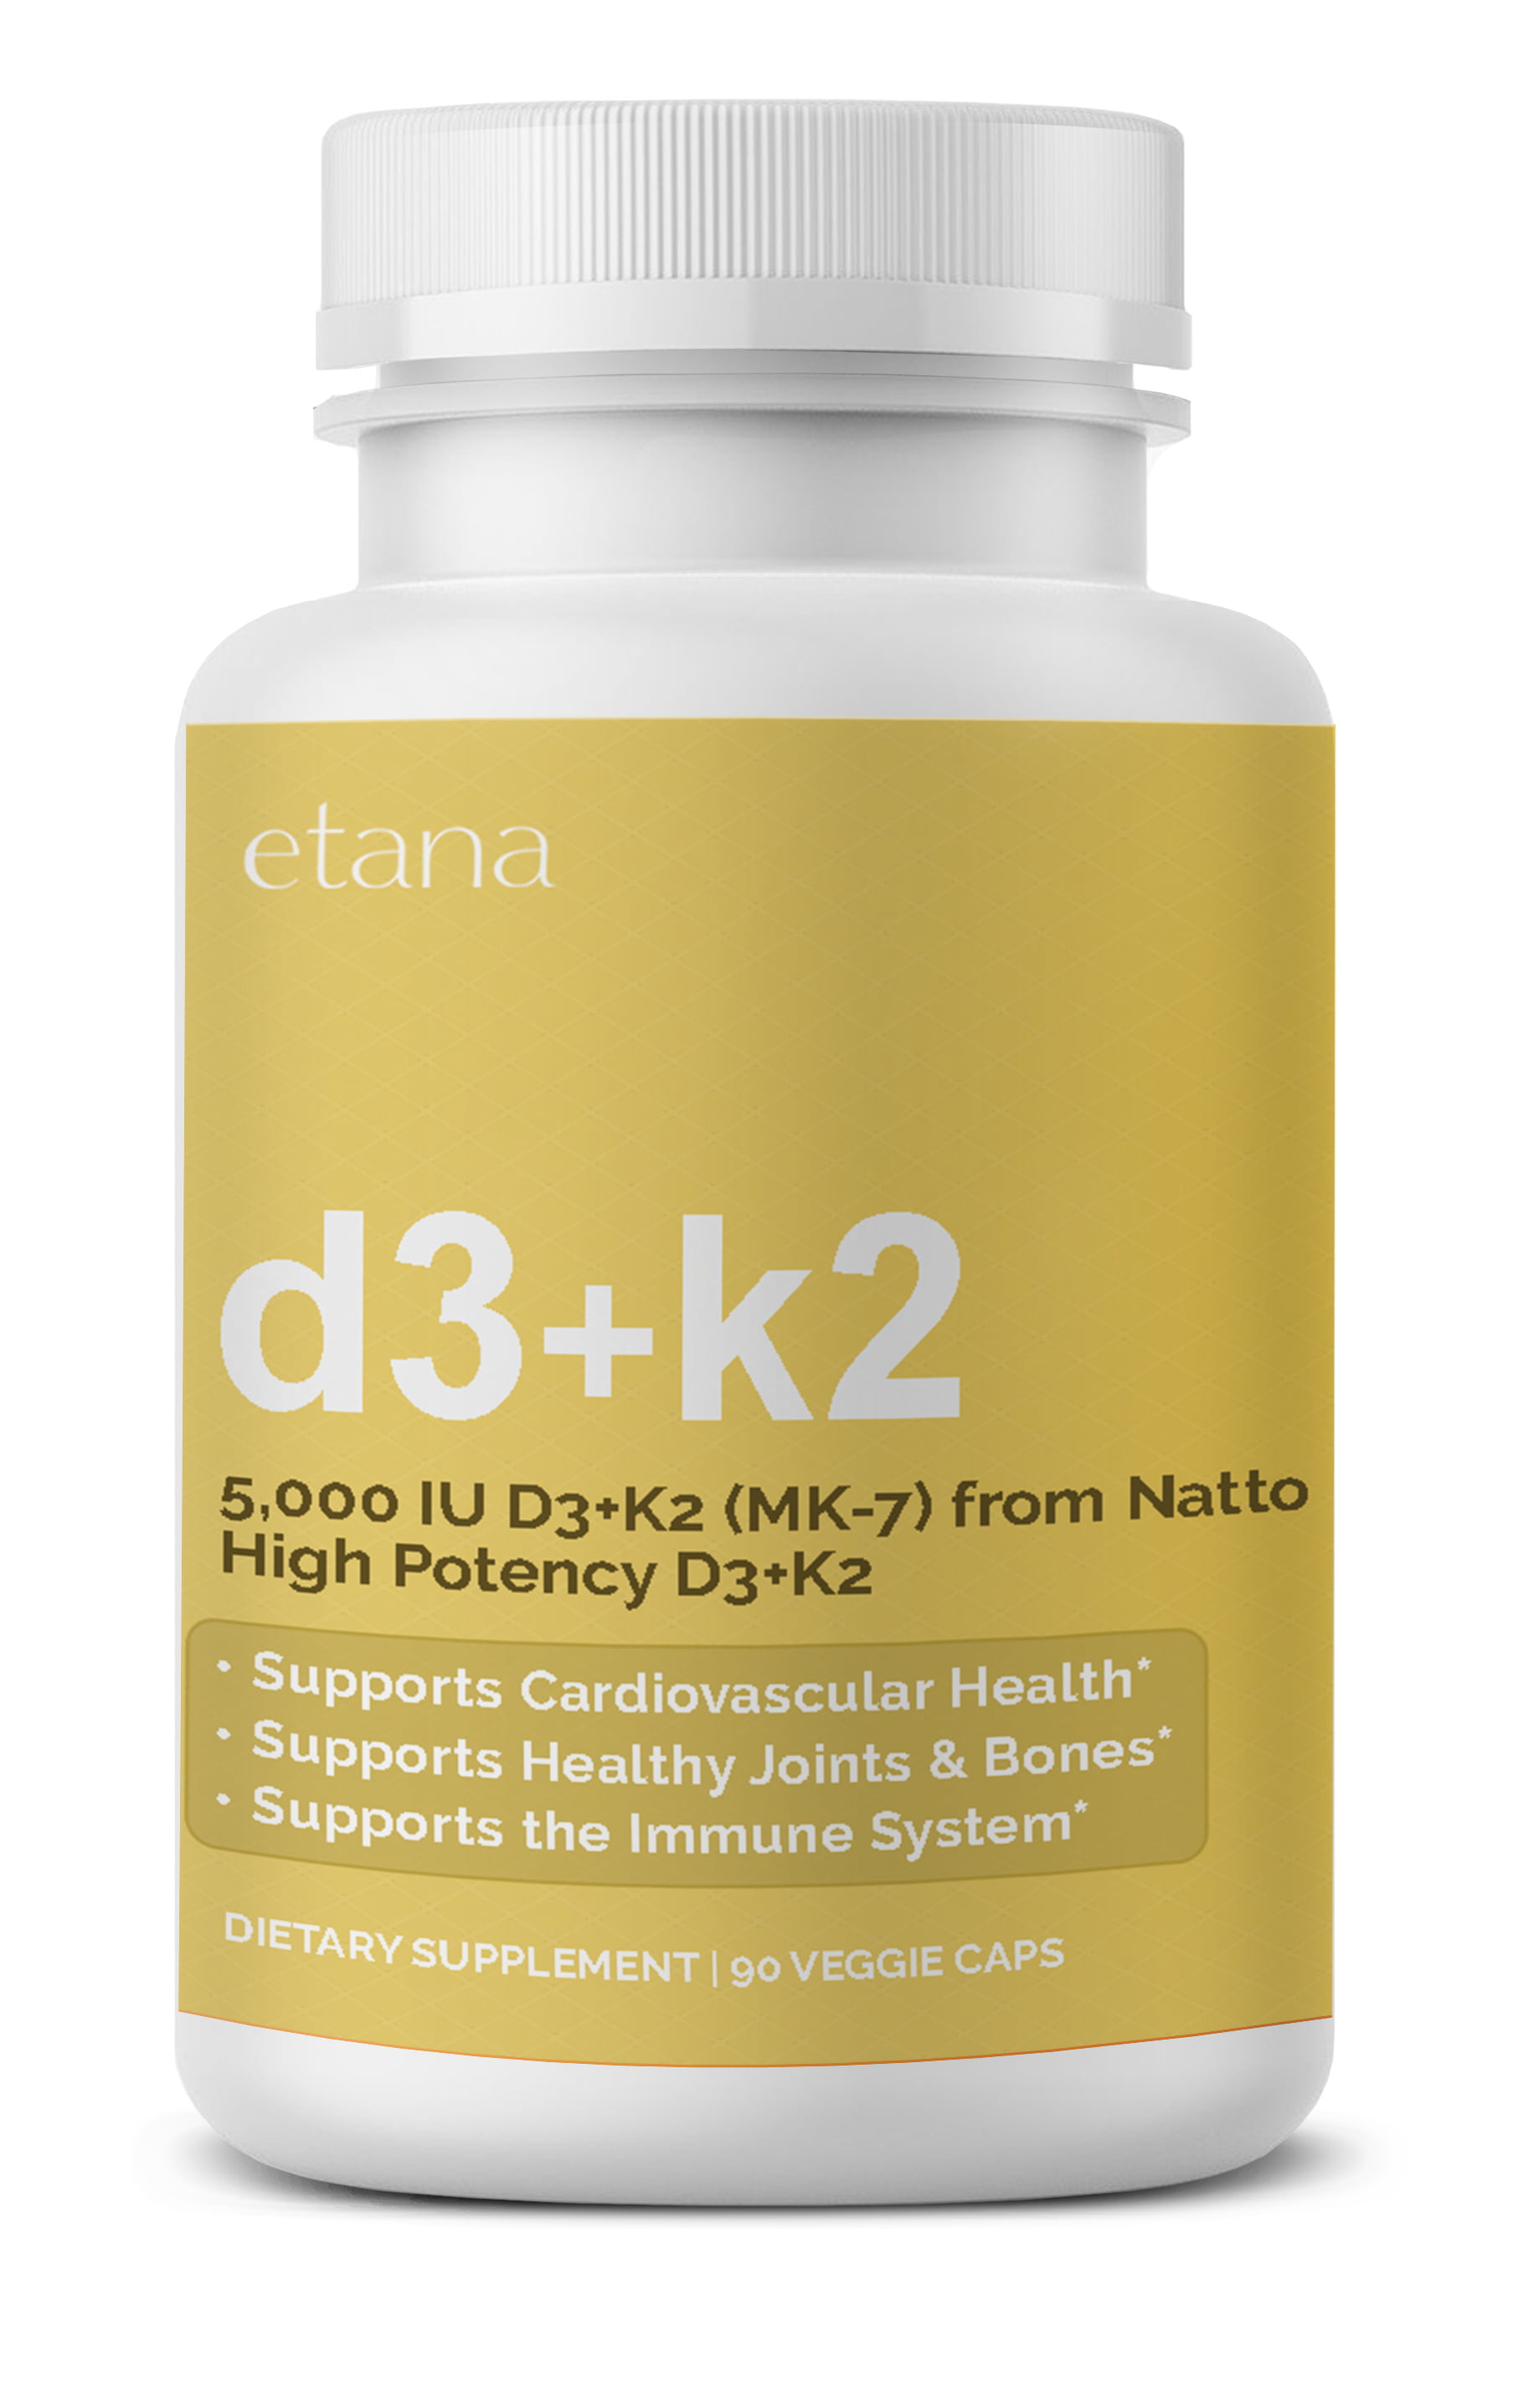 D3 + K2 &ndash; Vitamin D3 (5,000 IU) + Vitamin K2 (MK-7) &ndash; Etana Beauty &ndash; 90 Day Supply &ndash; High-Potency, Bioavailable MK-7 from Japanese Fermented Natto